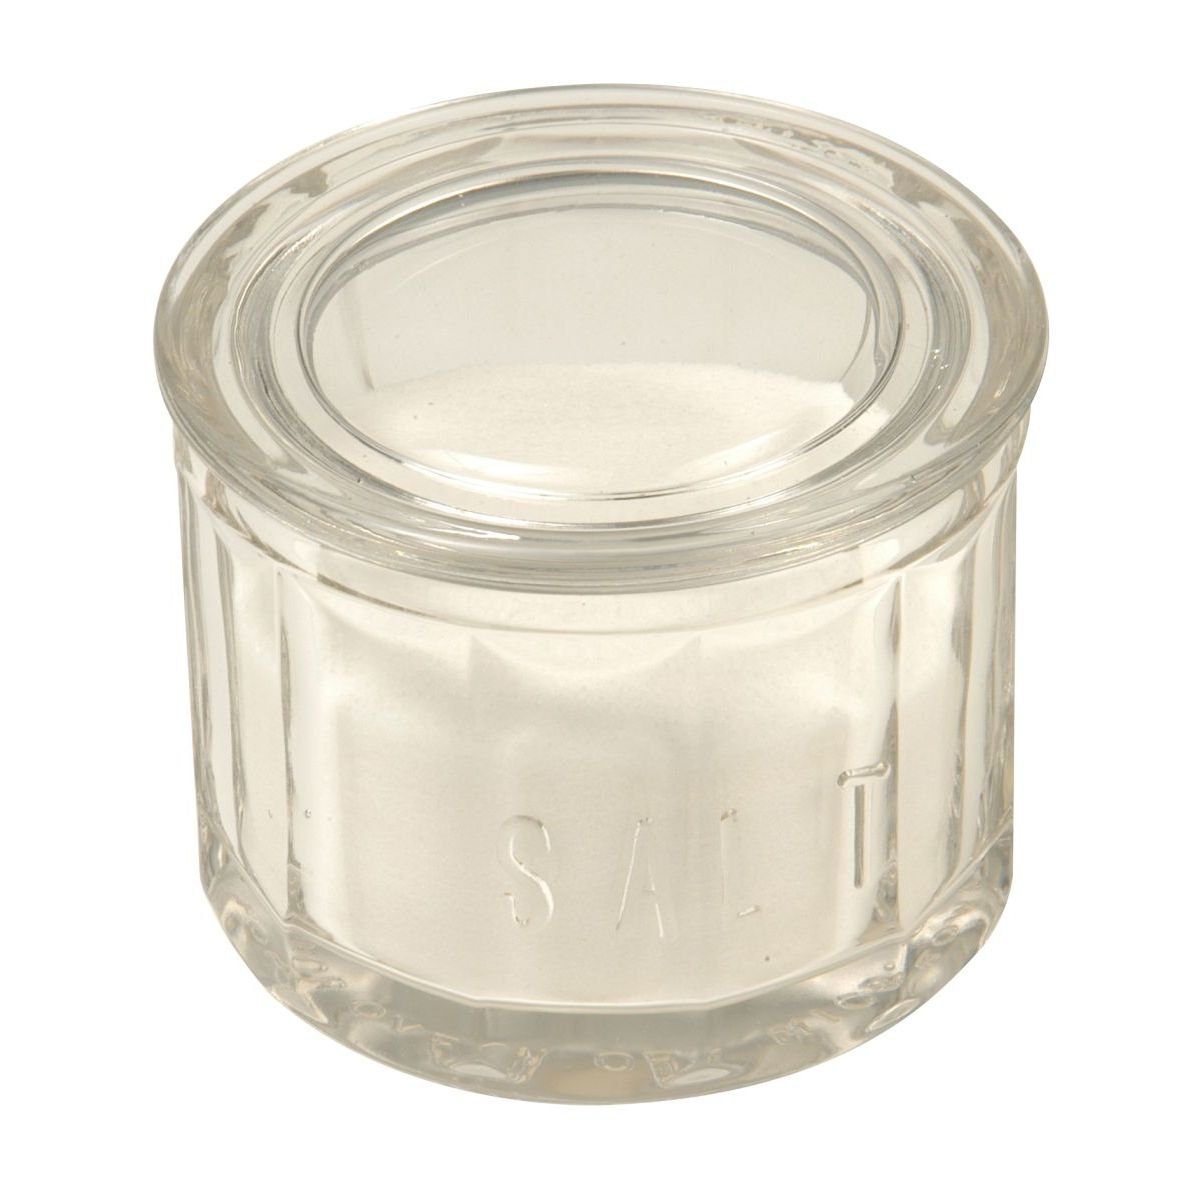 Salzdose Laursen Glas Salztruhe Dose aus "Salt" Vorratsdose Ib - Laursen Salzstreuer 0369-00